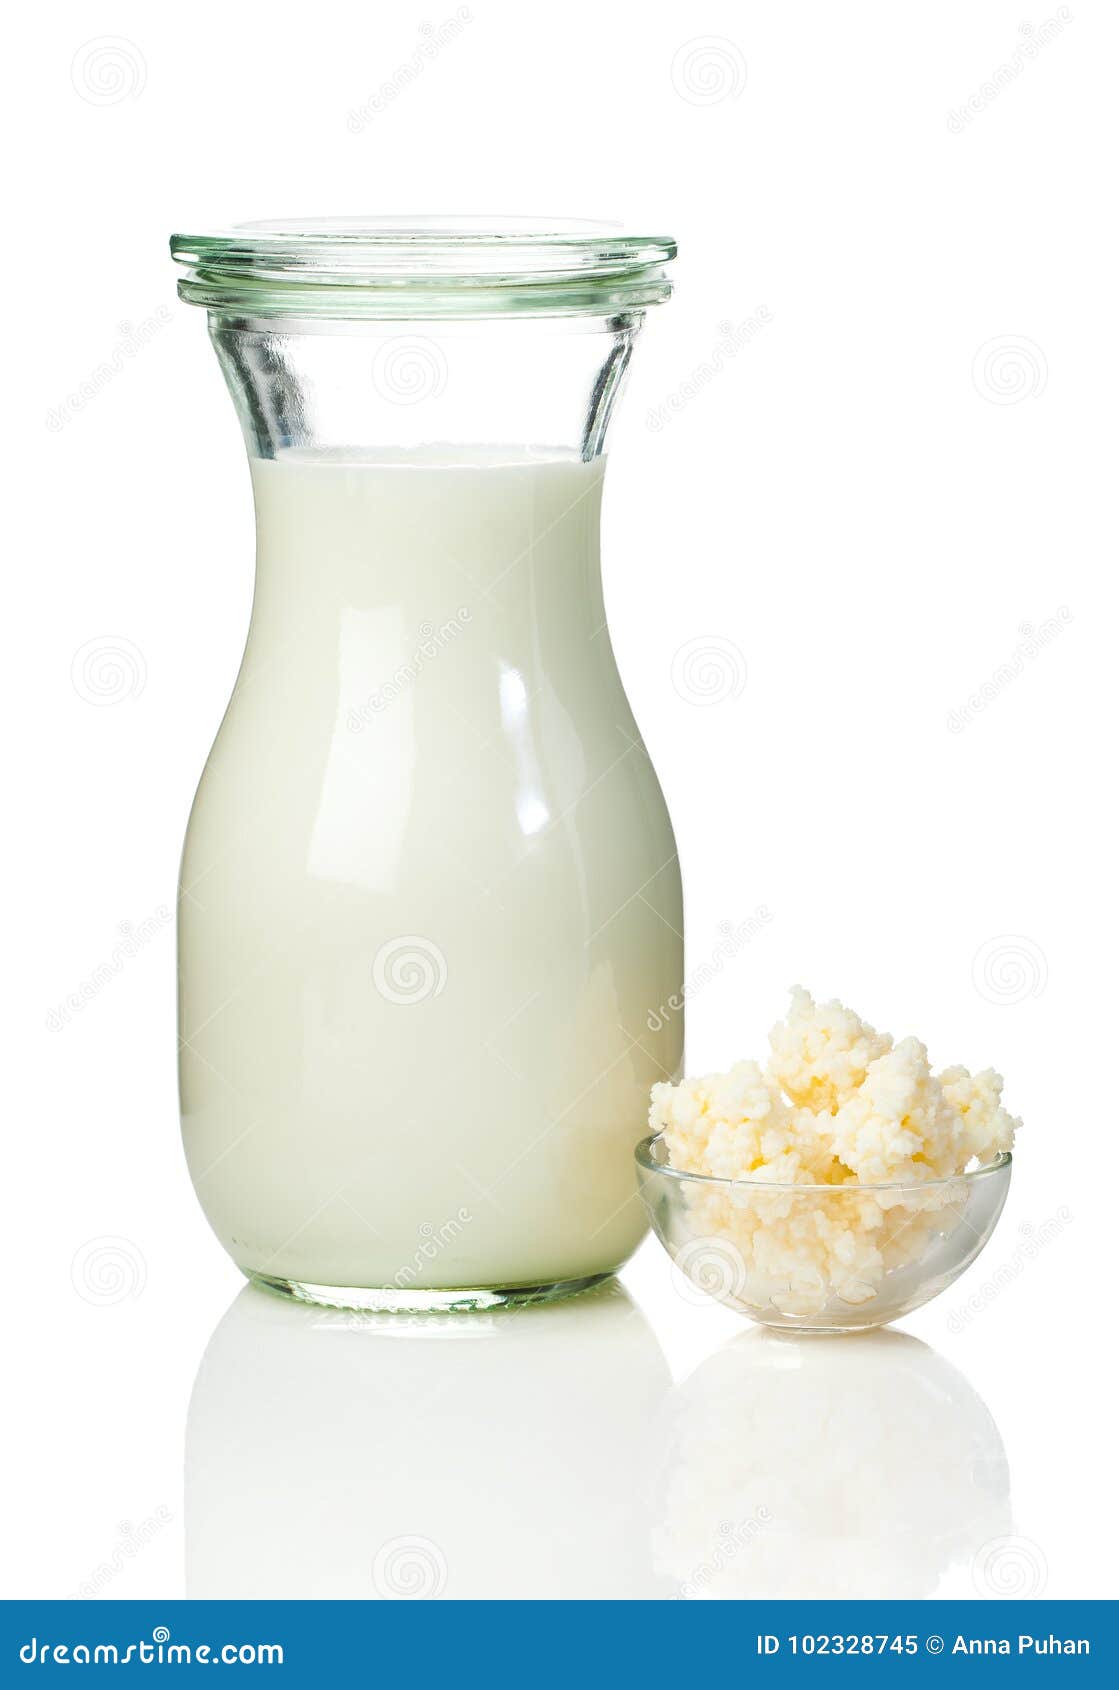 milk kefir grains